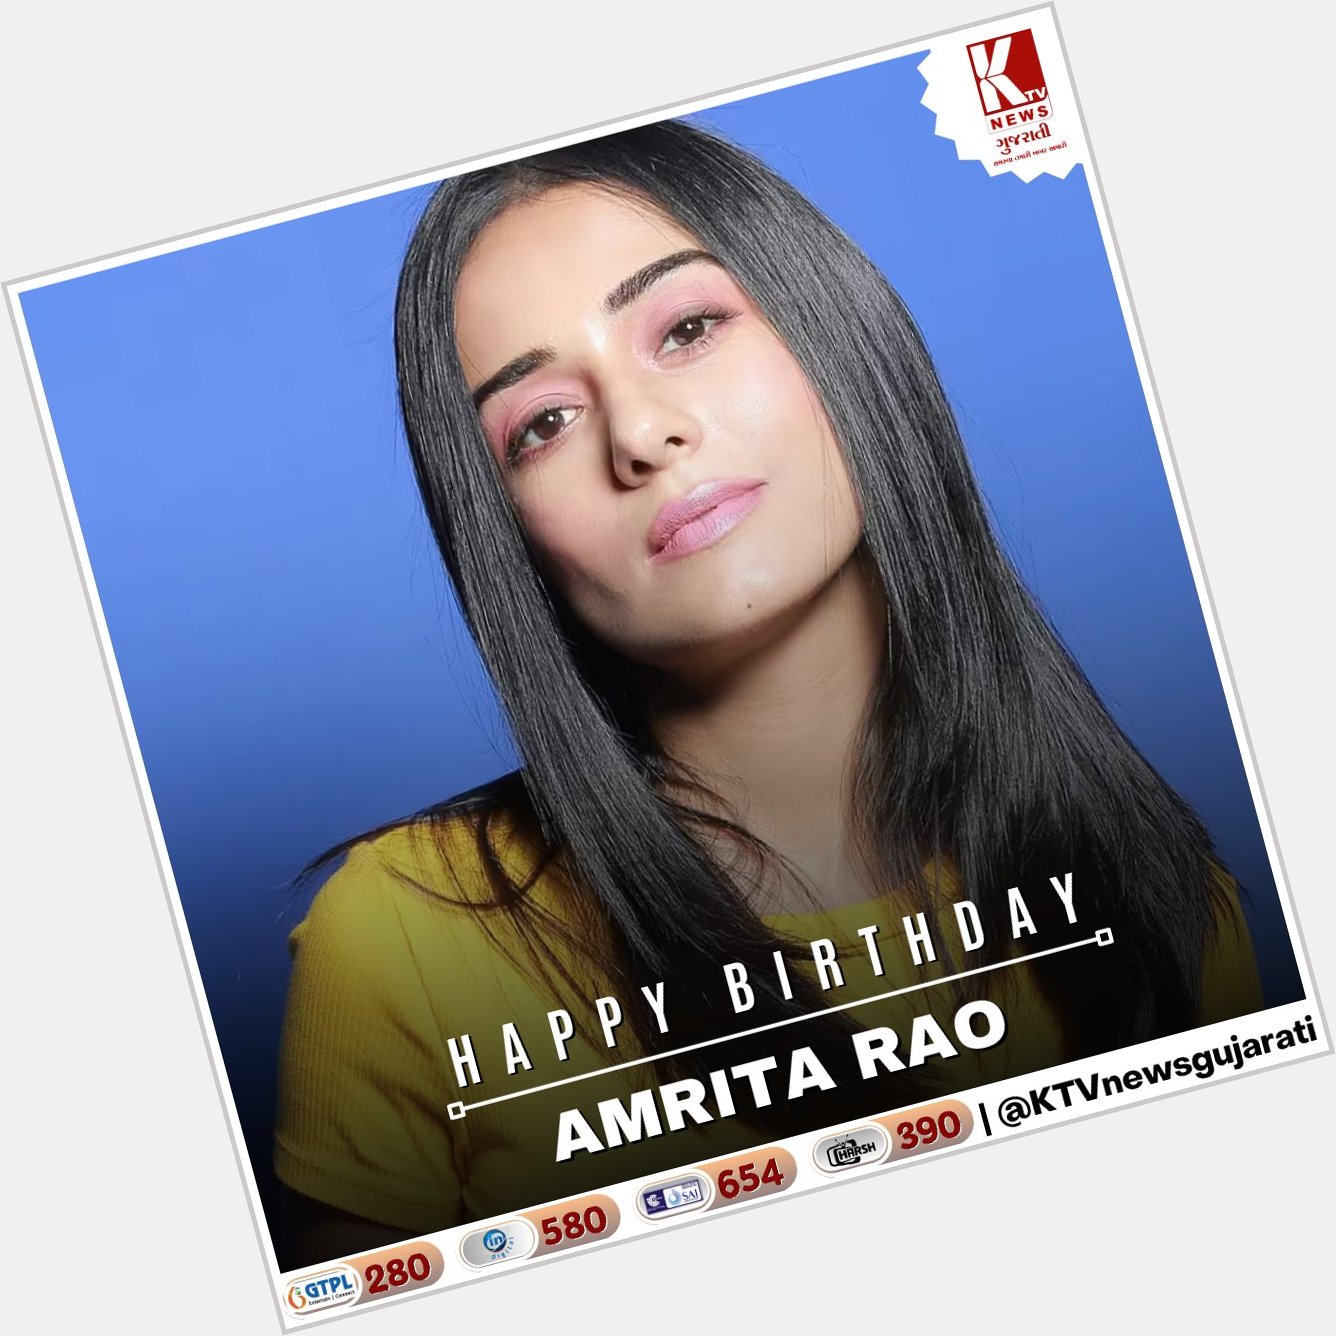 Happy Birthday Amrita Rao 
.
.
.      